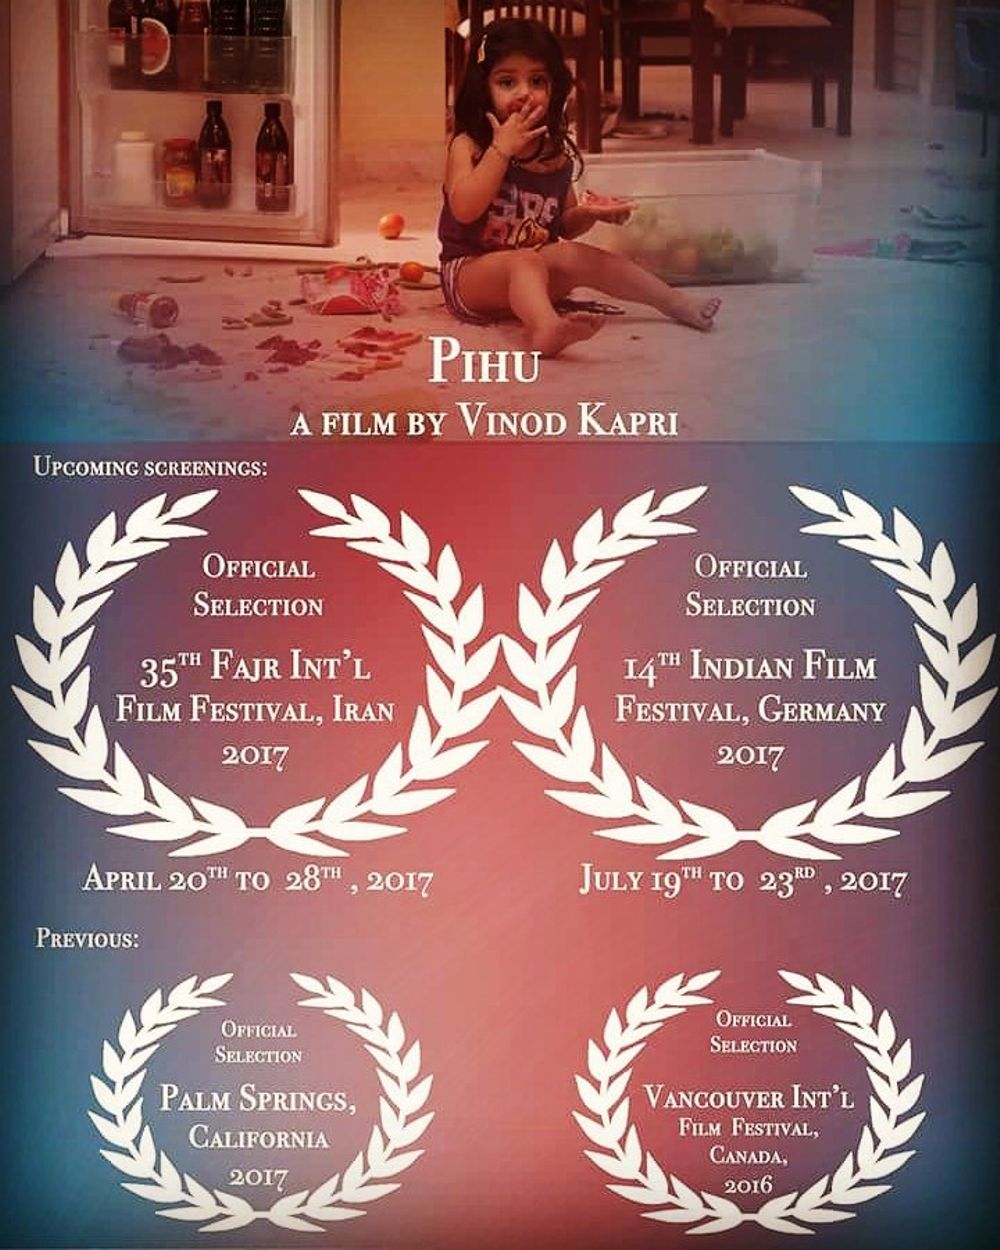 Pihu Movie Review